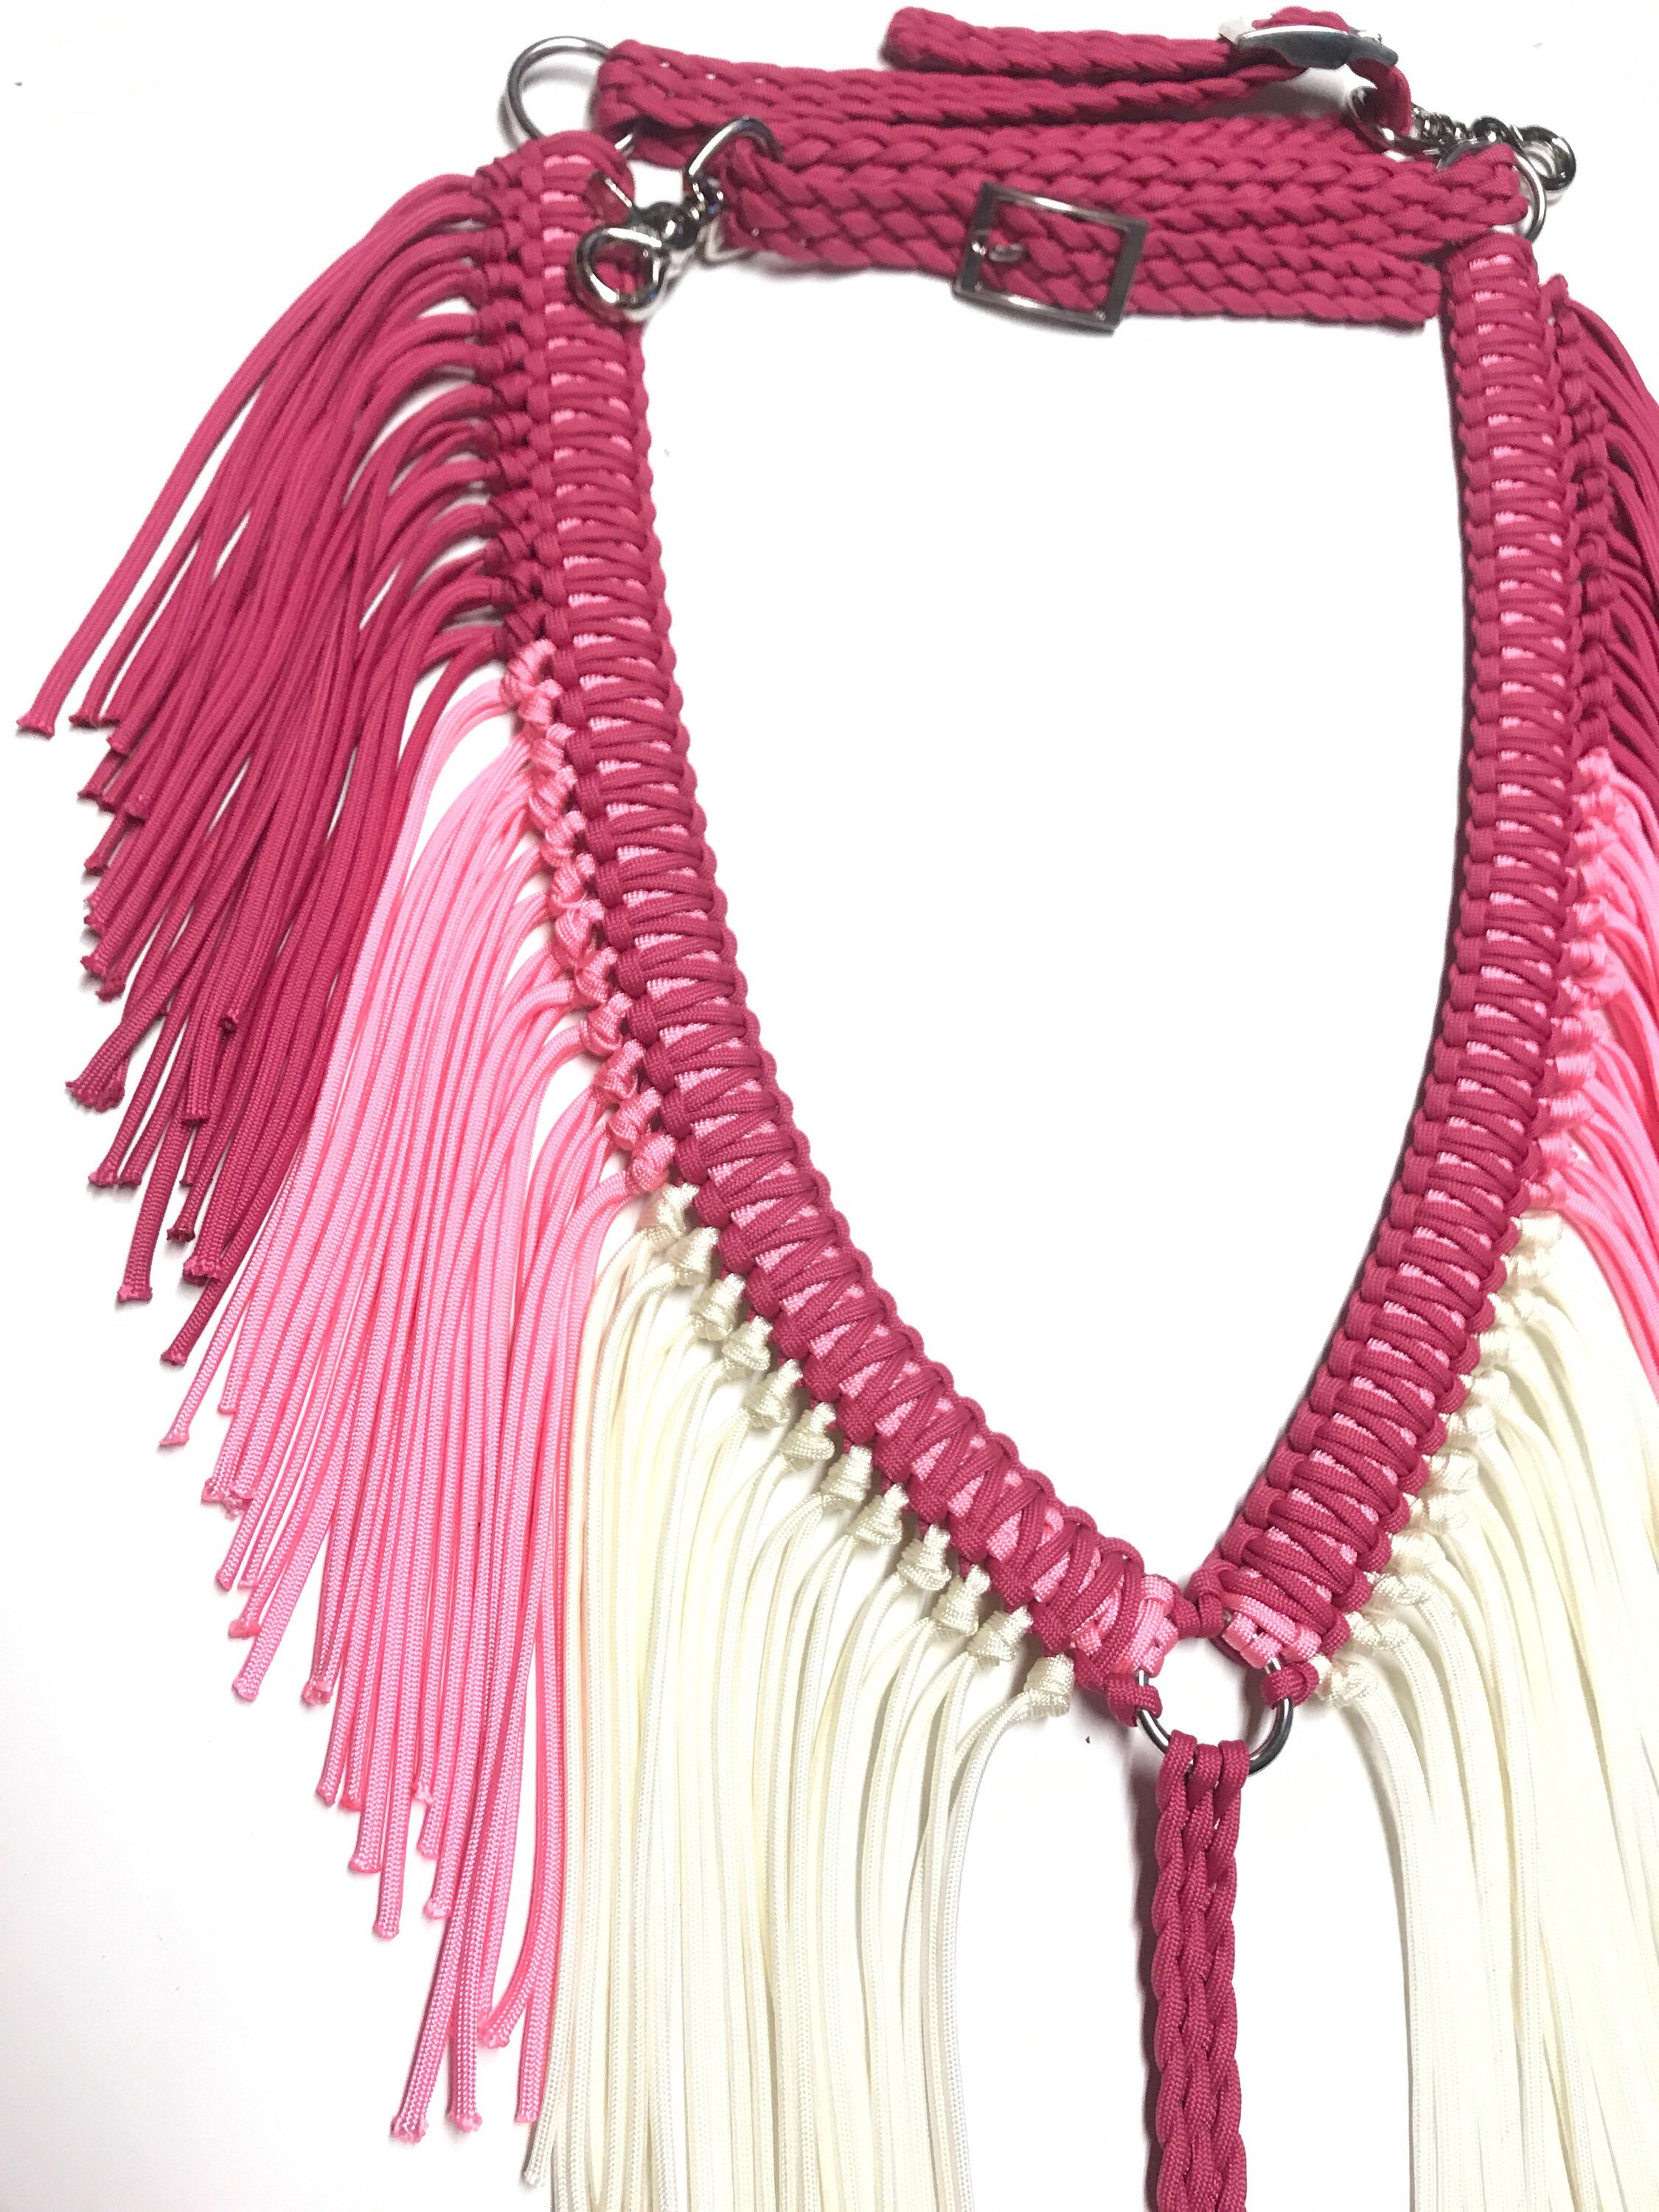 Fringe breast collar Pink ombre Fringe breast collar horse | Etsy